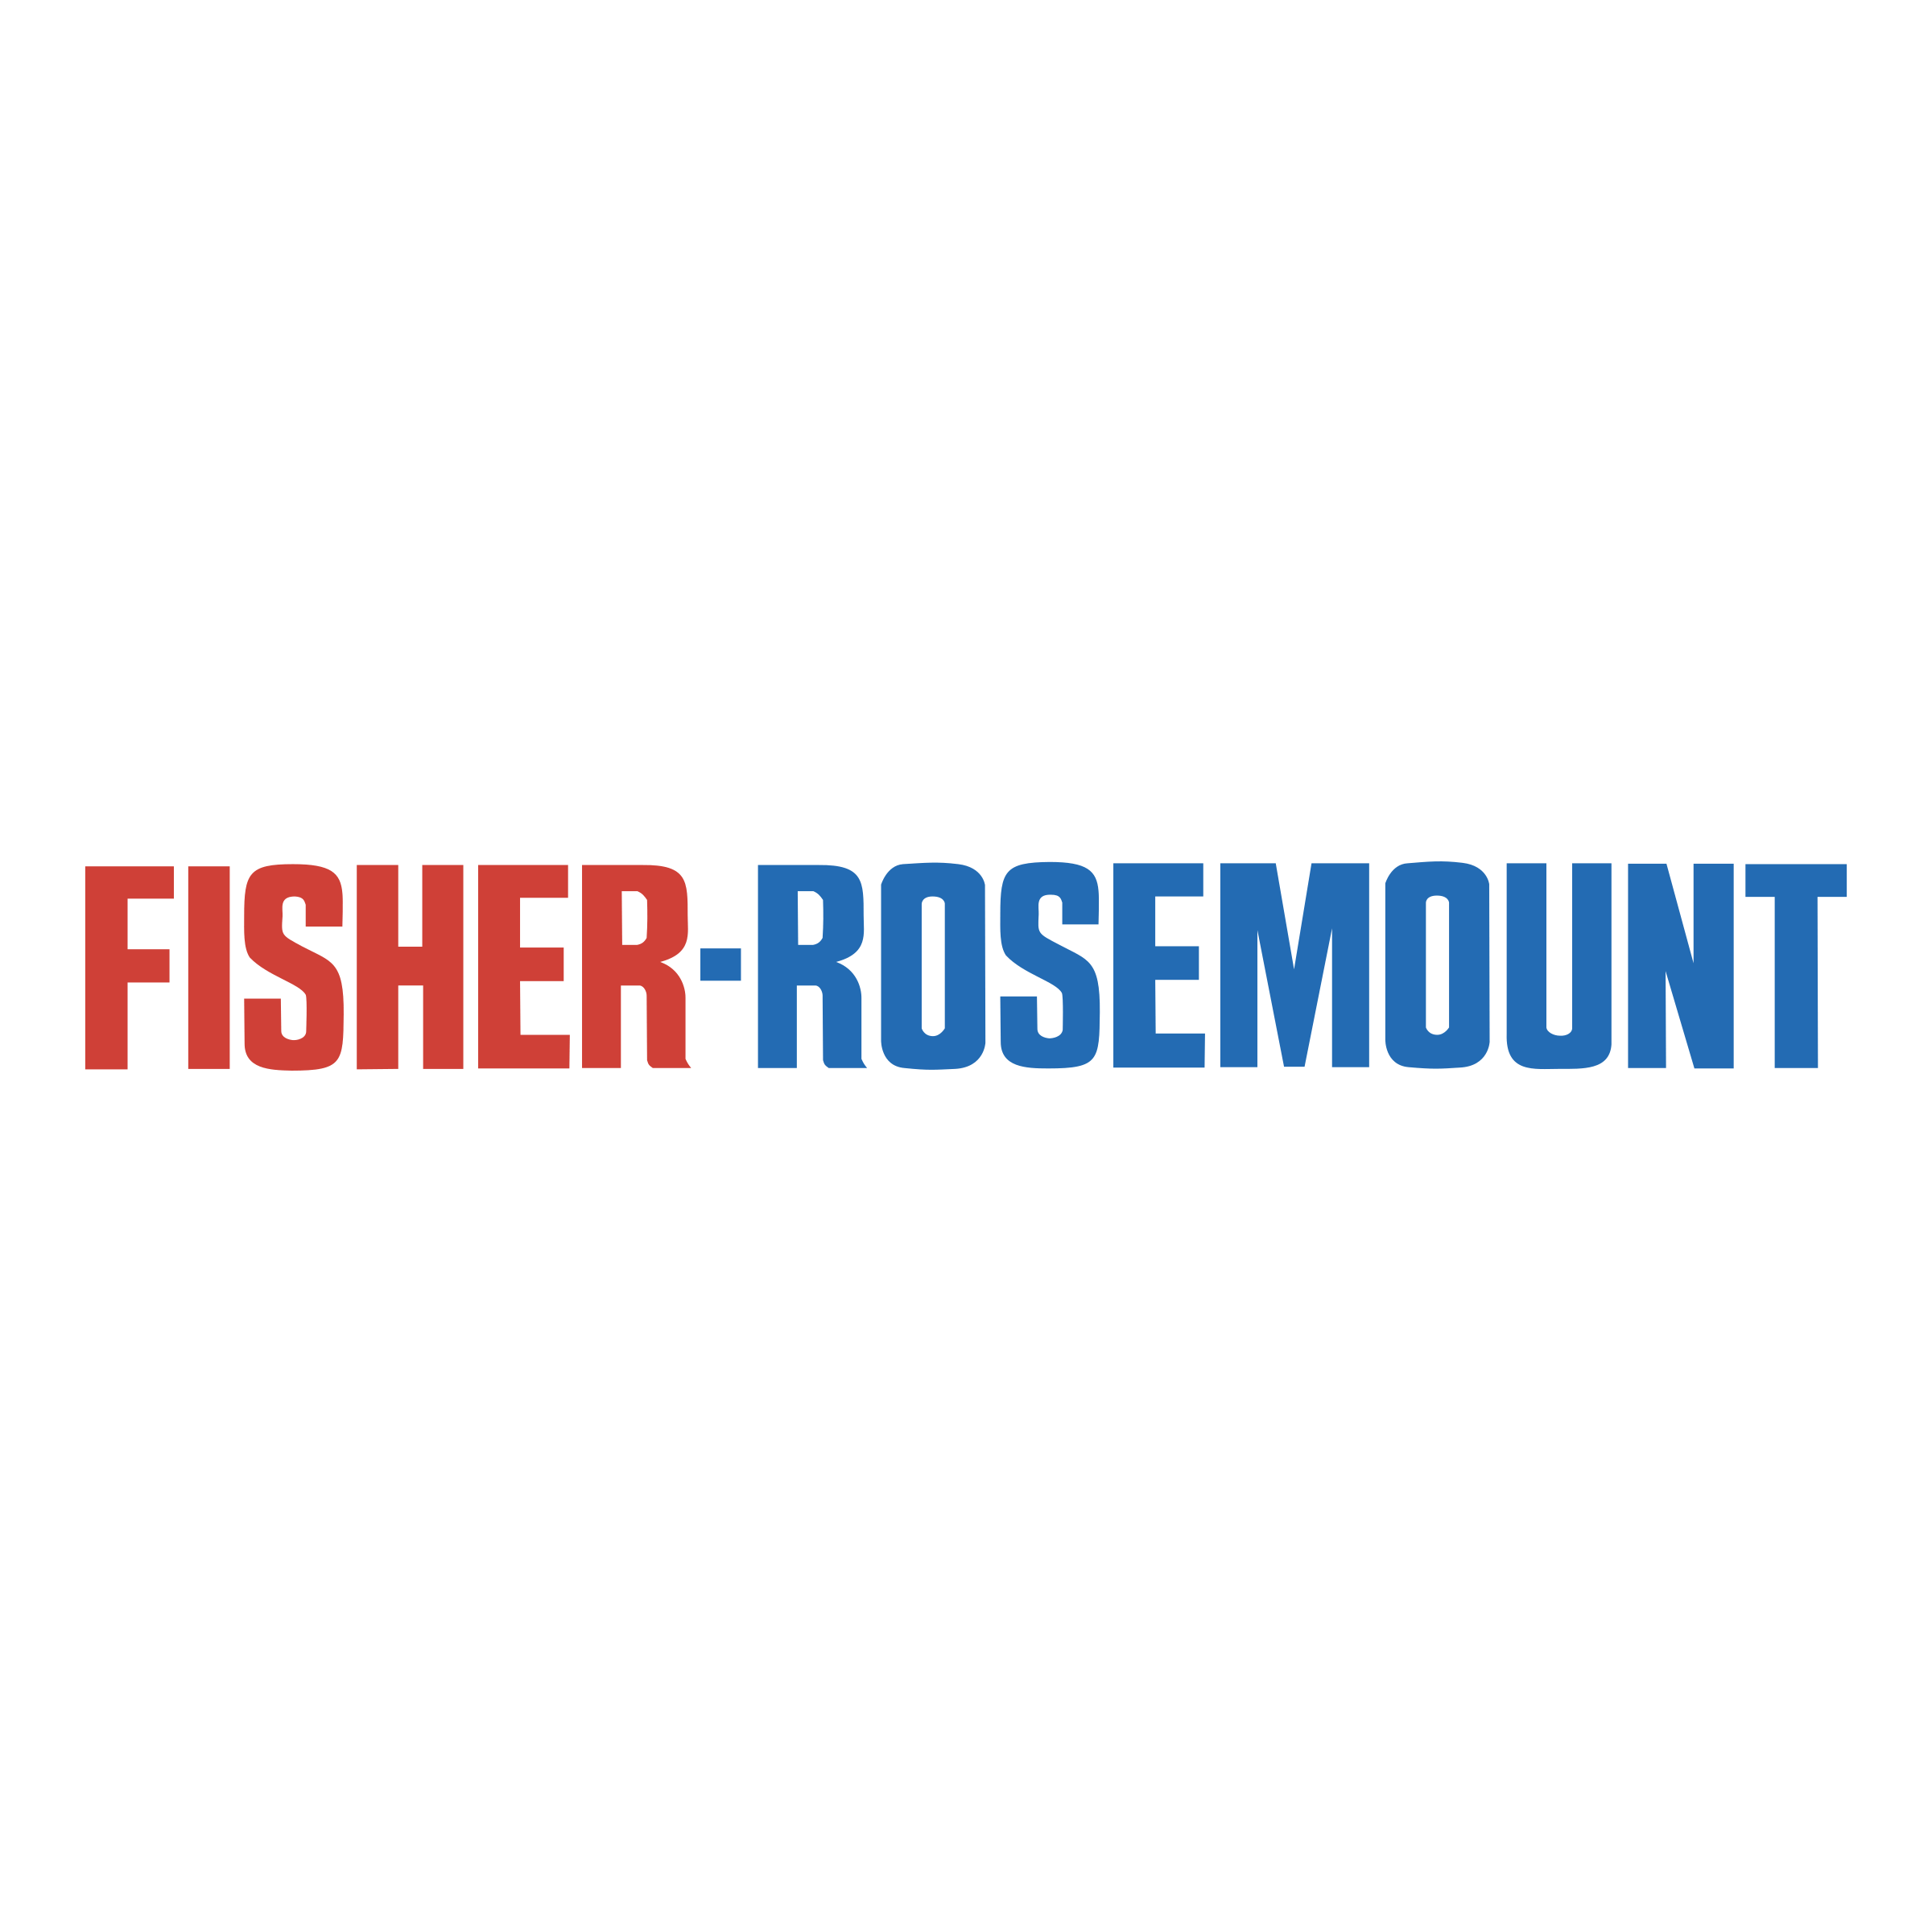 Rosemount Logo - Fisher Rosemount Logo PNG Transparent & SVG Vector - Freebie Supply